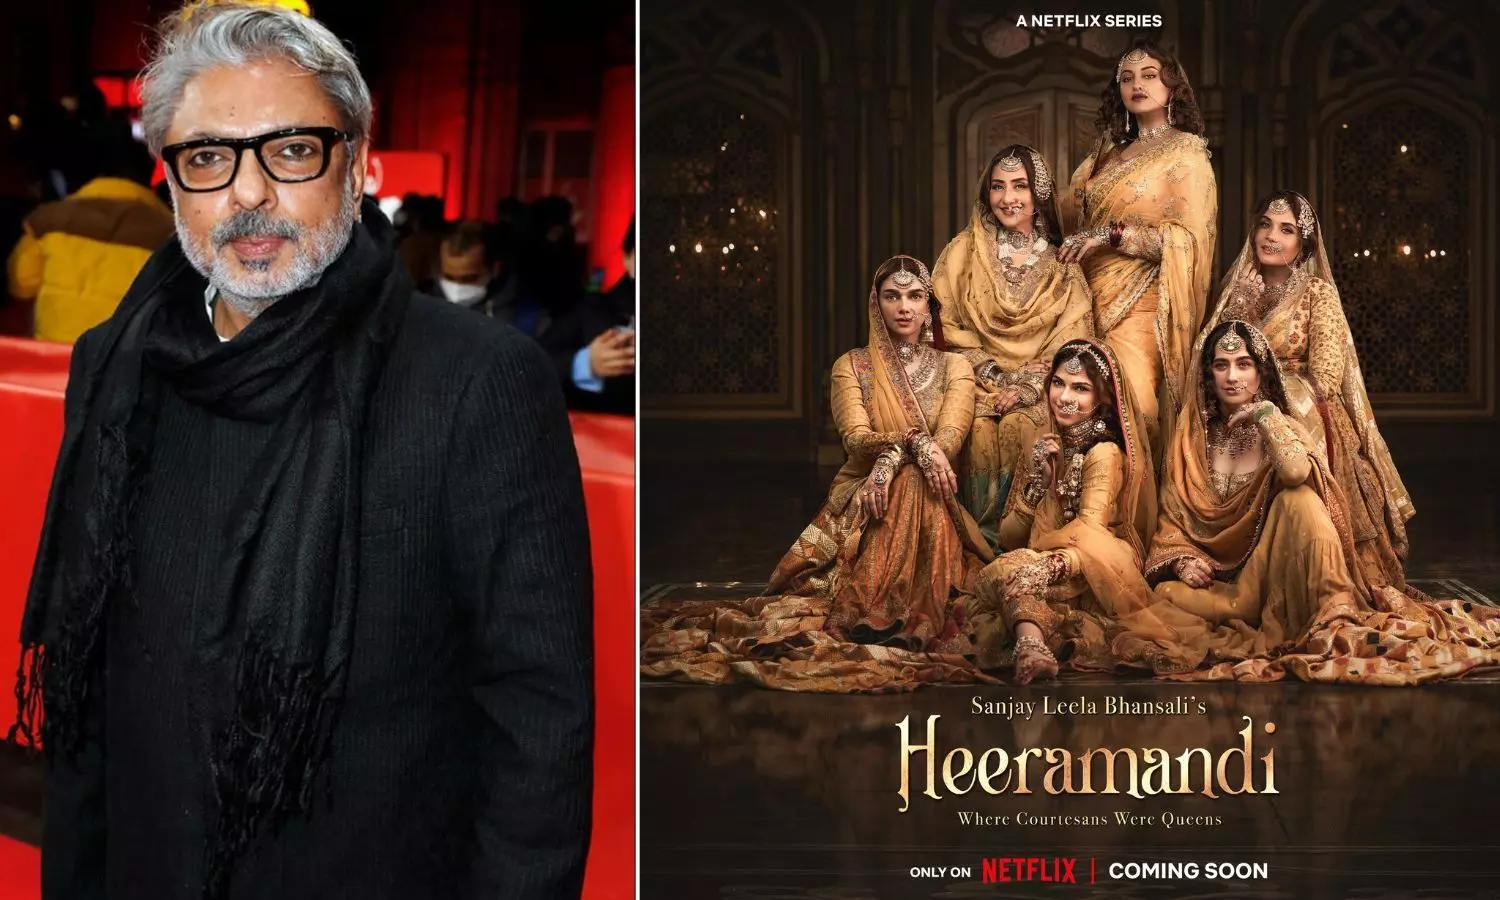 संजय लीला भंसाली की 'हीरामंडी : द डायमंड बाजार' का म्यूजिक एल्बम रिलीज

Debut web series 'Hiramandi Music album release of Sanjay Leela Bhansali's 'Hiramandi: The Diamond Bazaar'